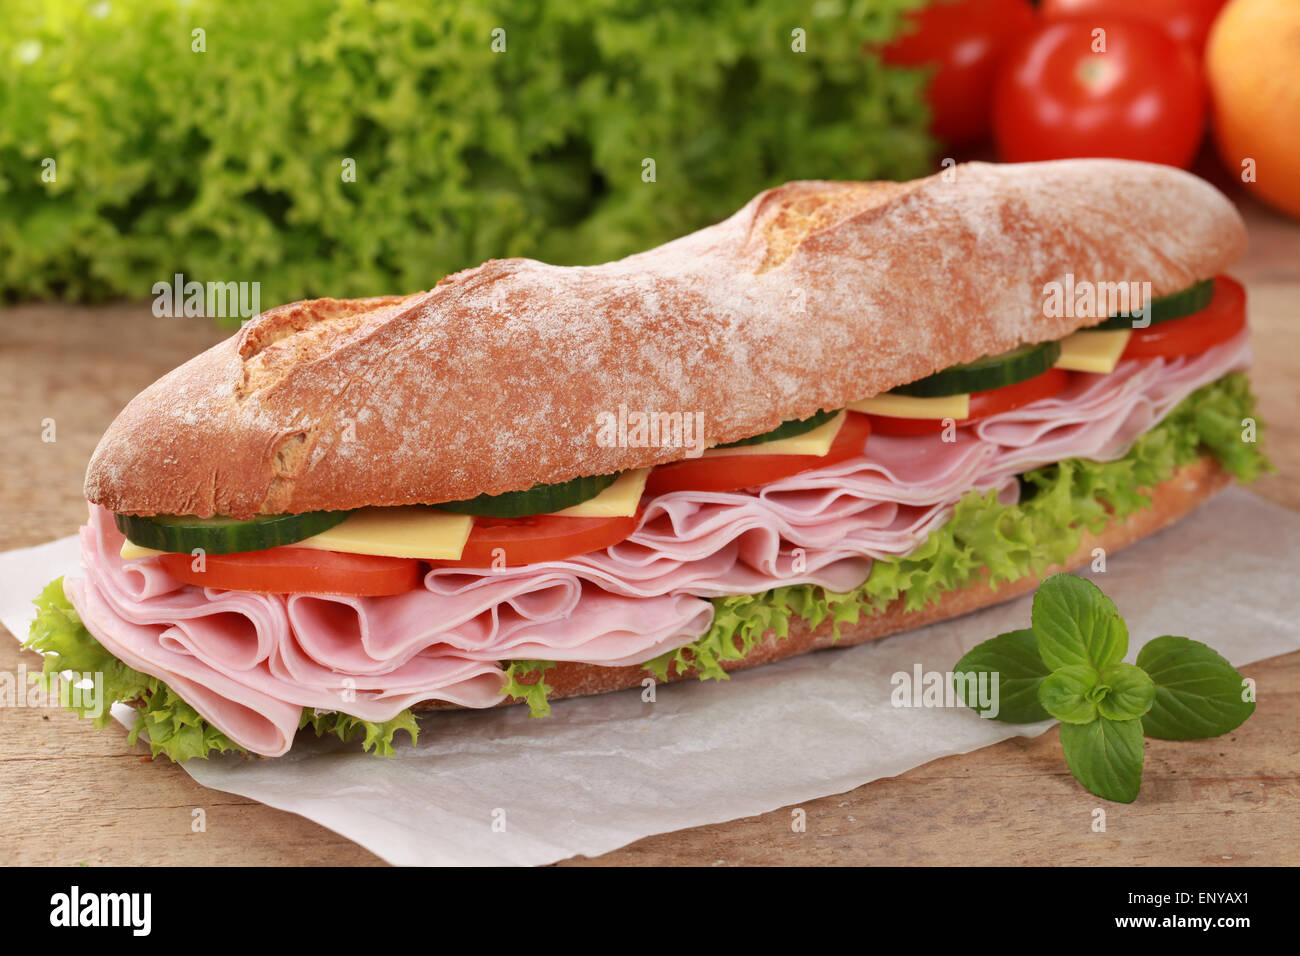 Sandwich mit schinken hi-res stock photography and images - Alamy